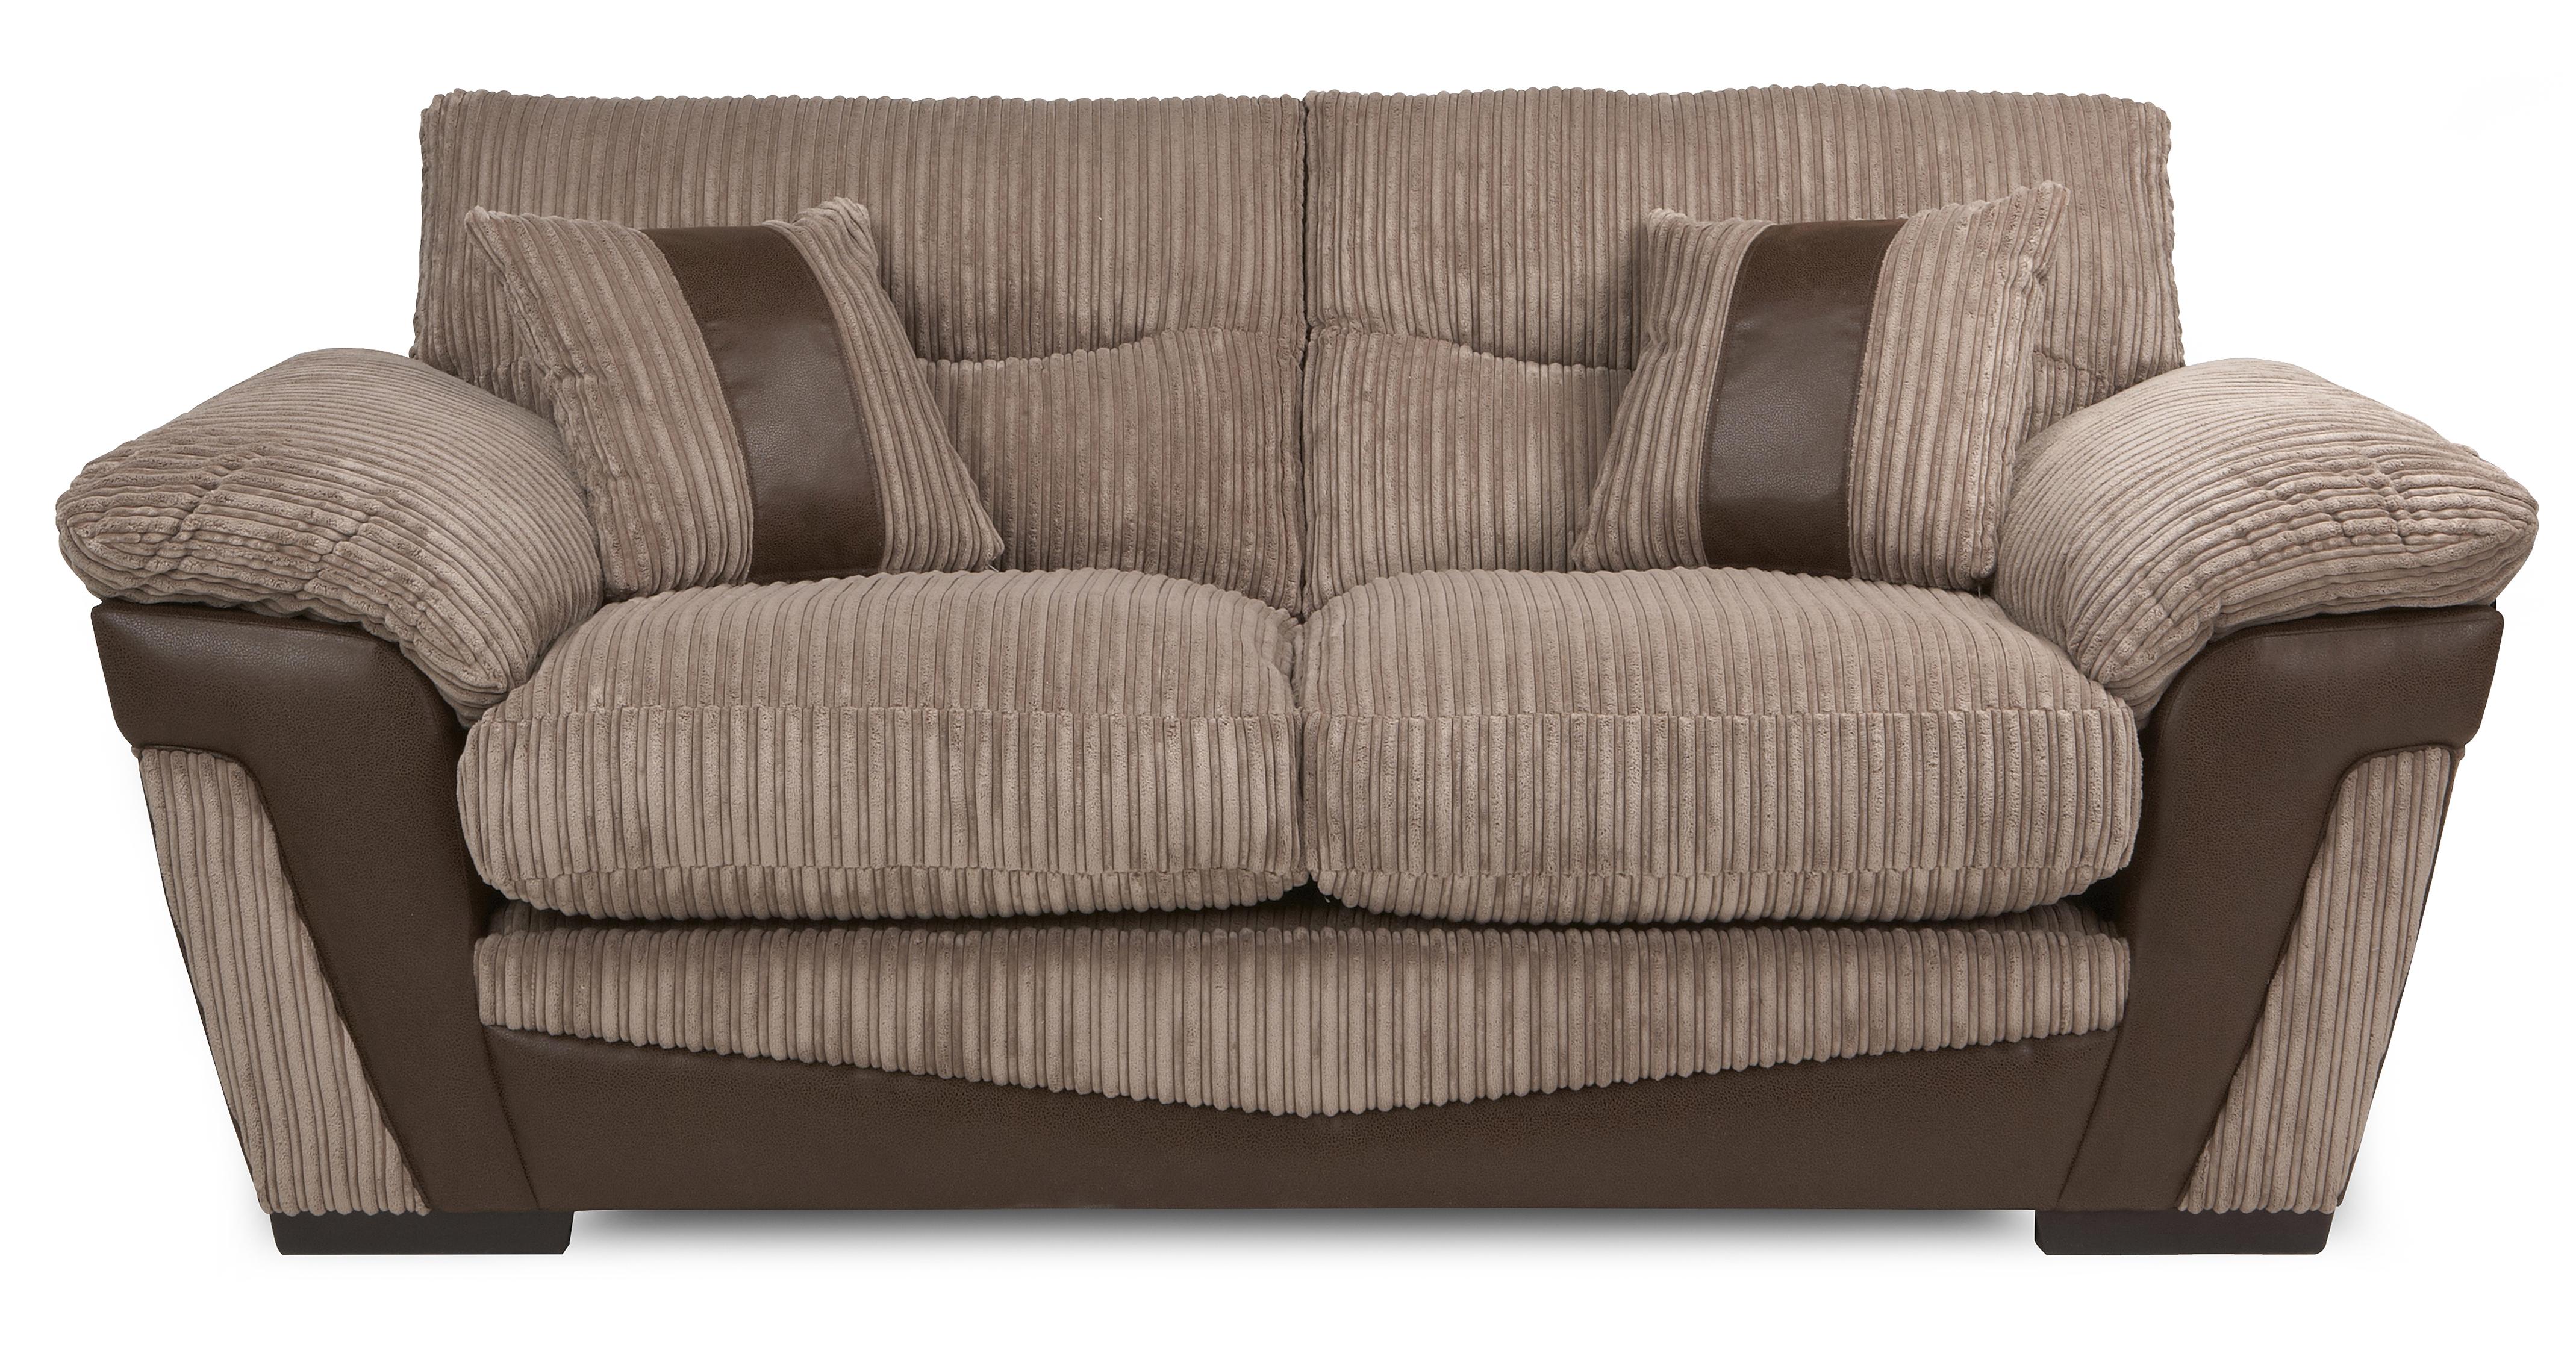 sofa bed on ebay